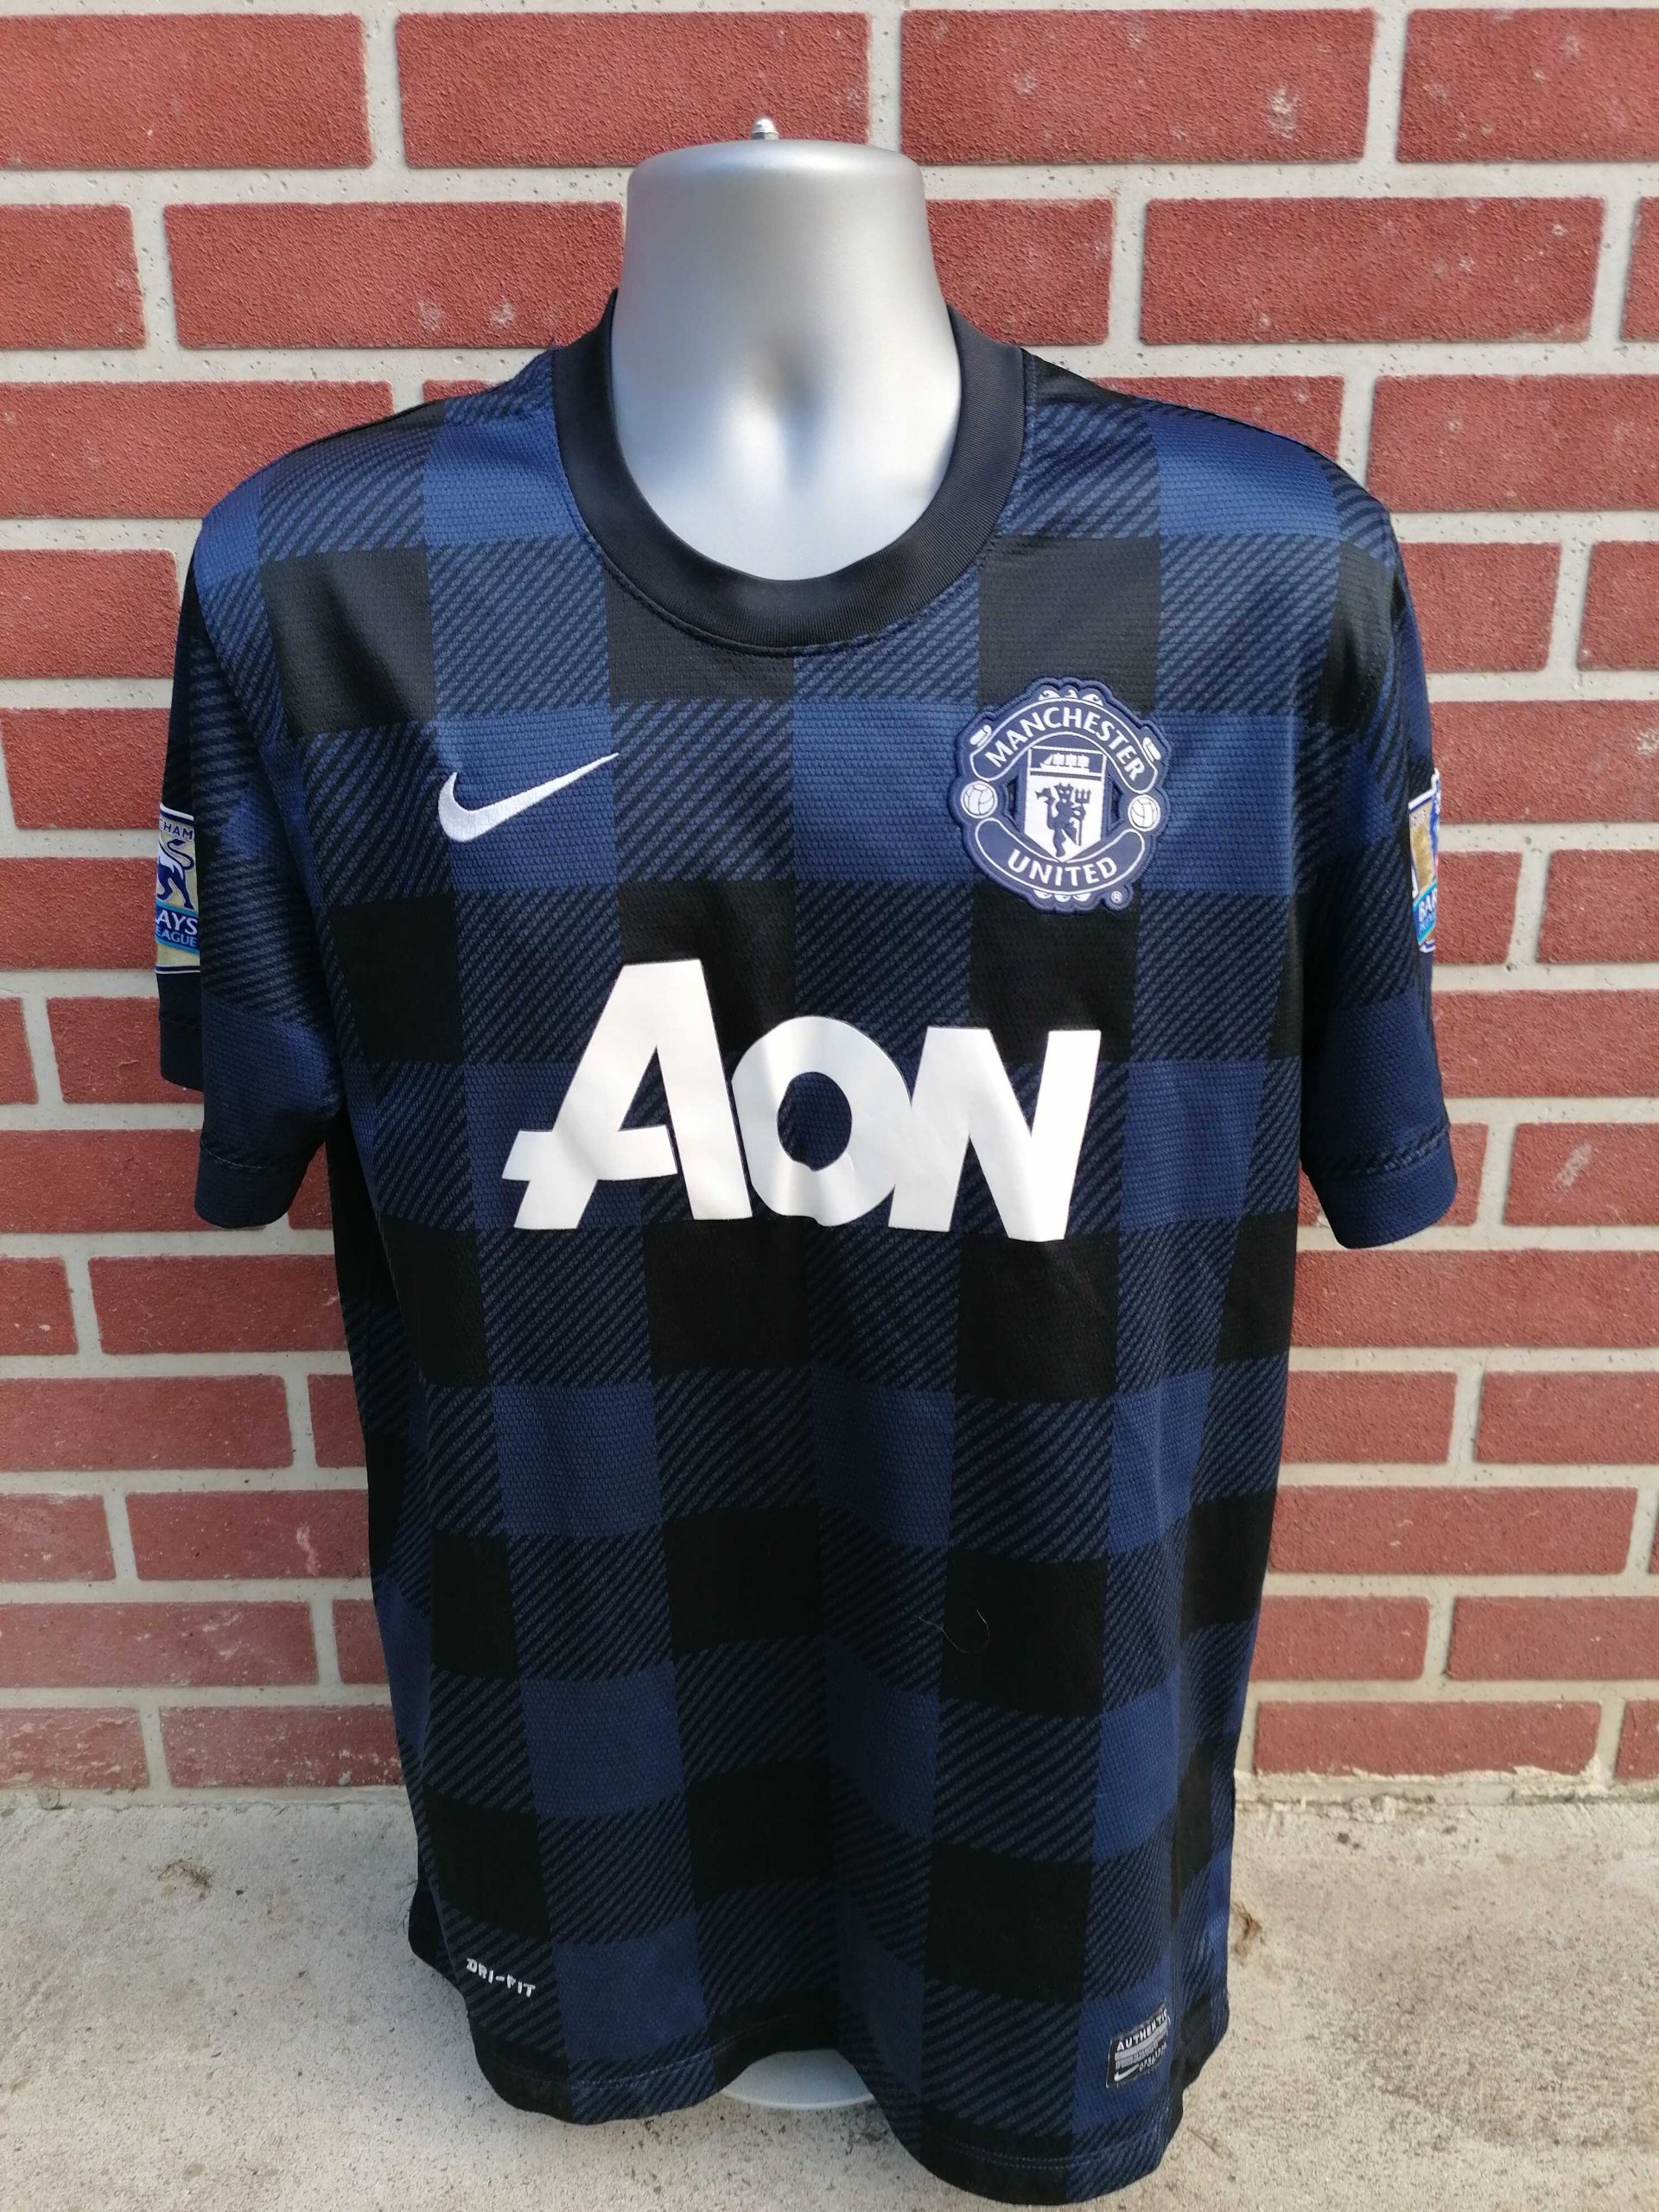 Manchester United 2013 2014 away football shirt Nike size L no 20 